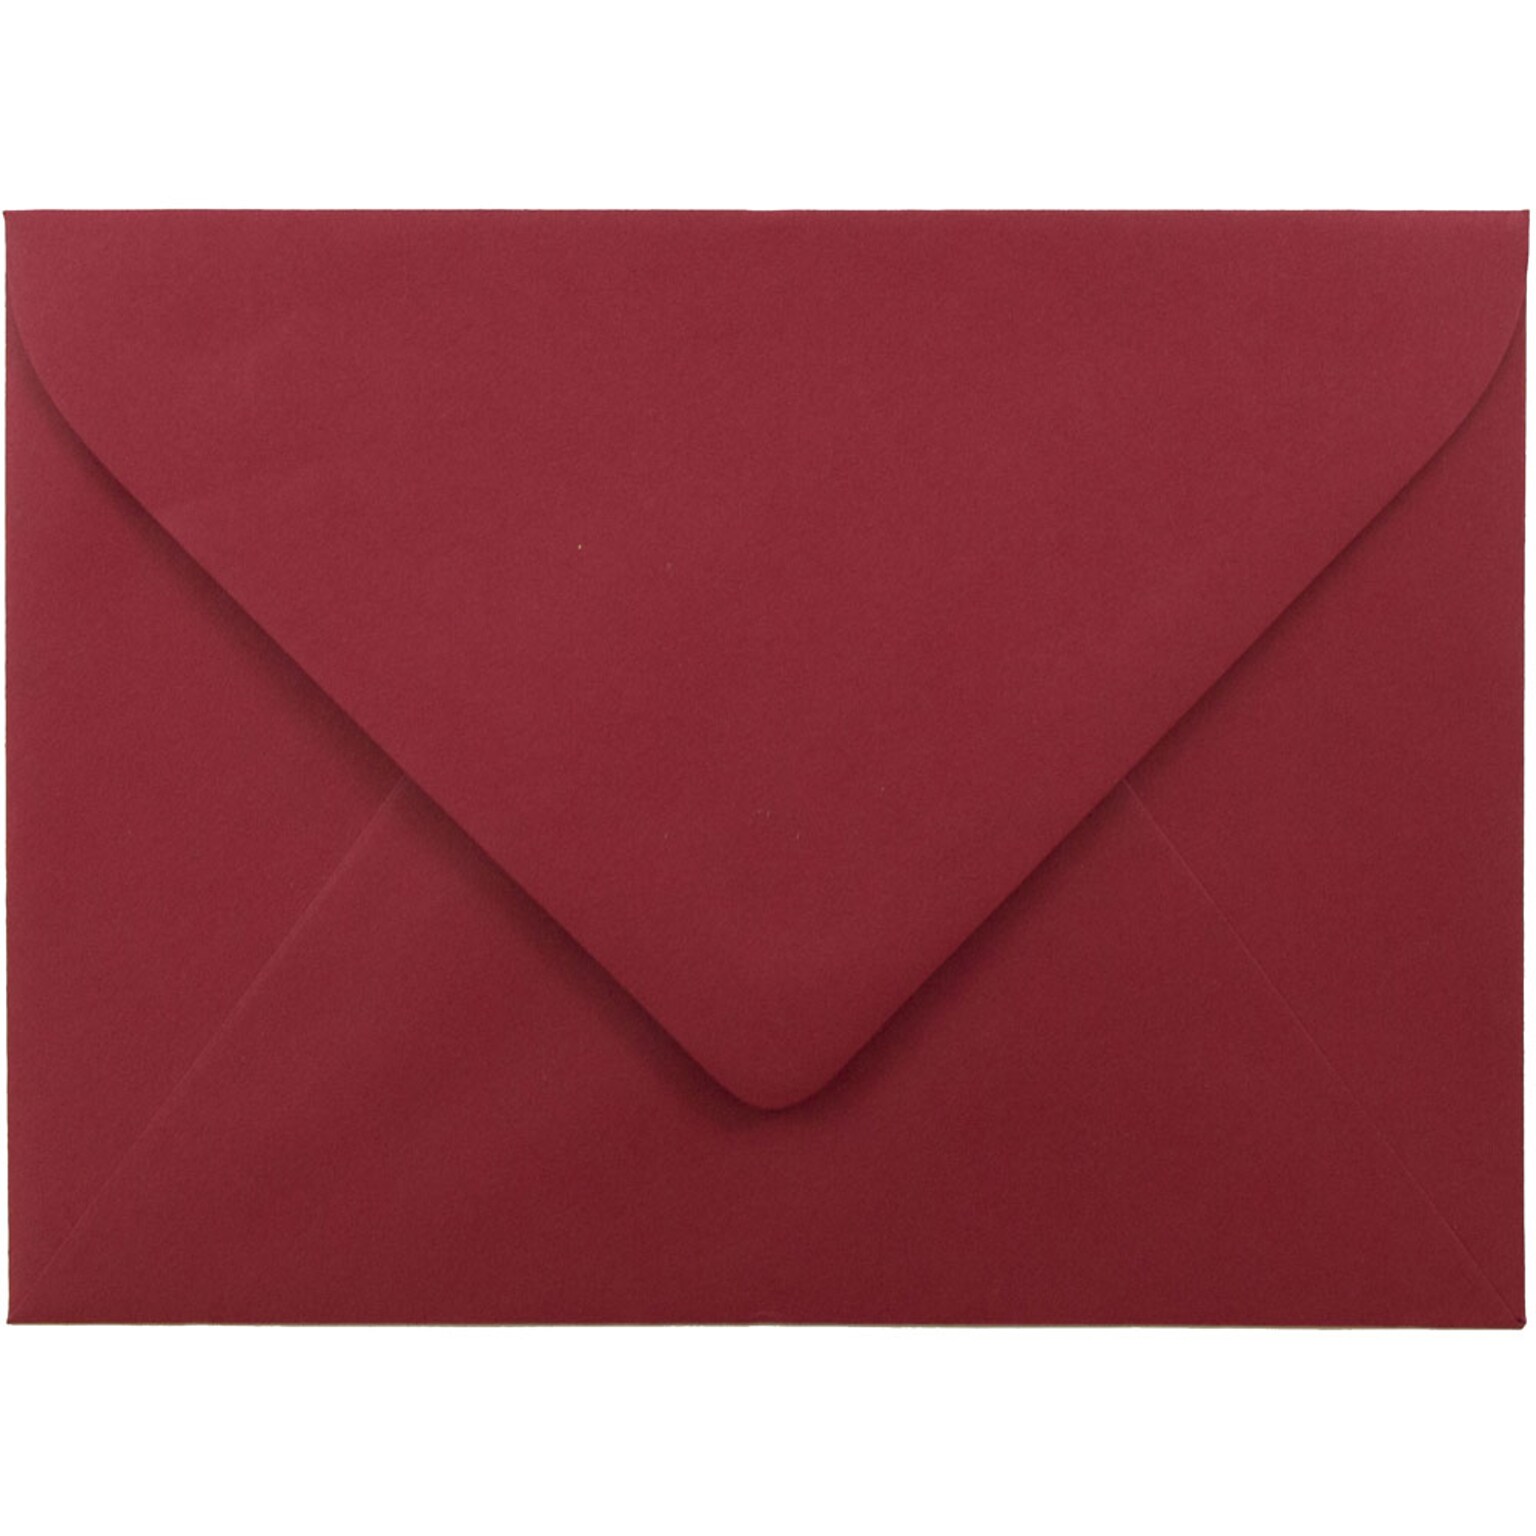 JAM PAPER A8 Translucent Vellum Invitation Envelopes, 5 1/2 x 8 1/8, White Laid Virtual Effects, 25/Pack (5156835I)